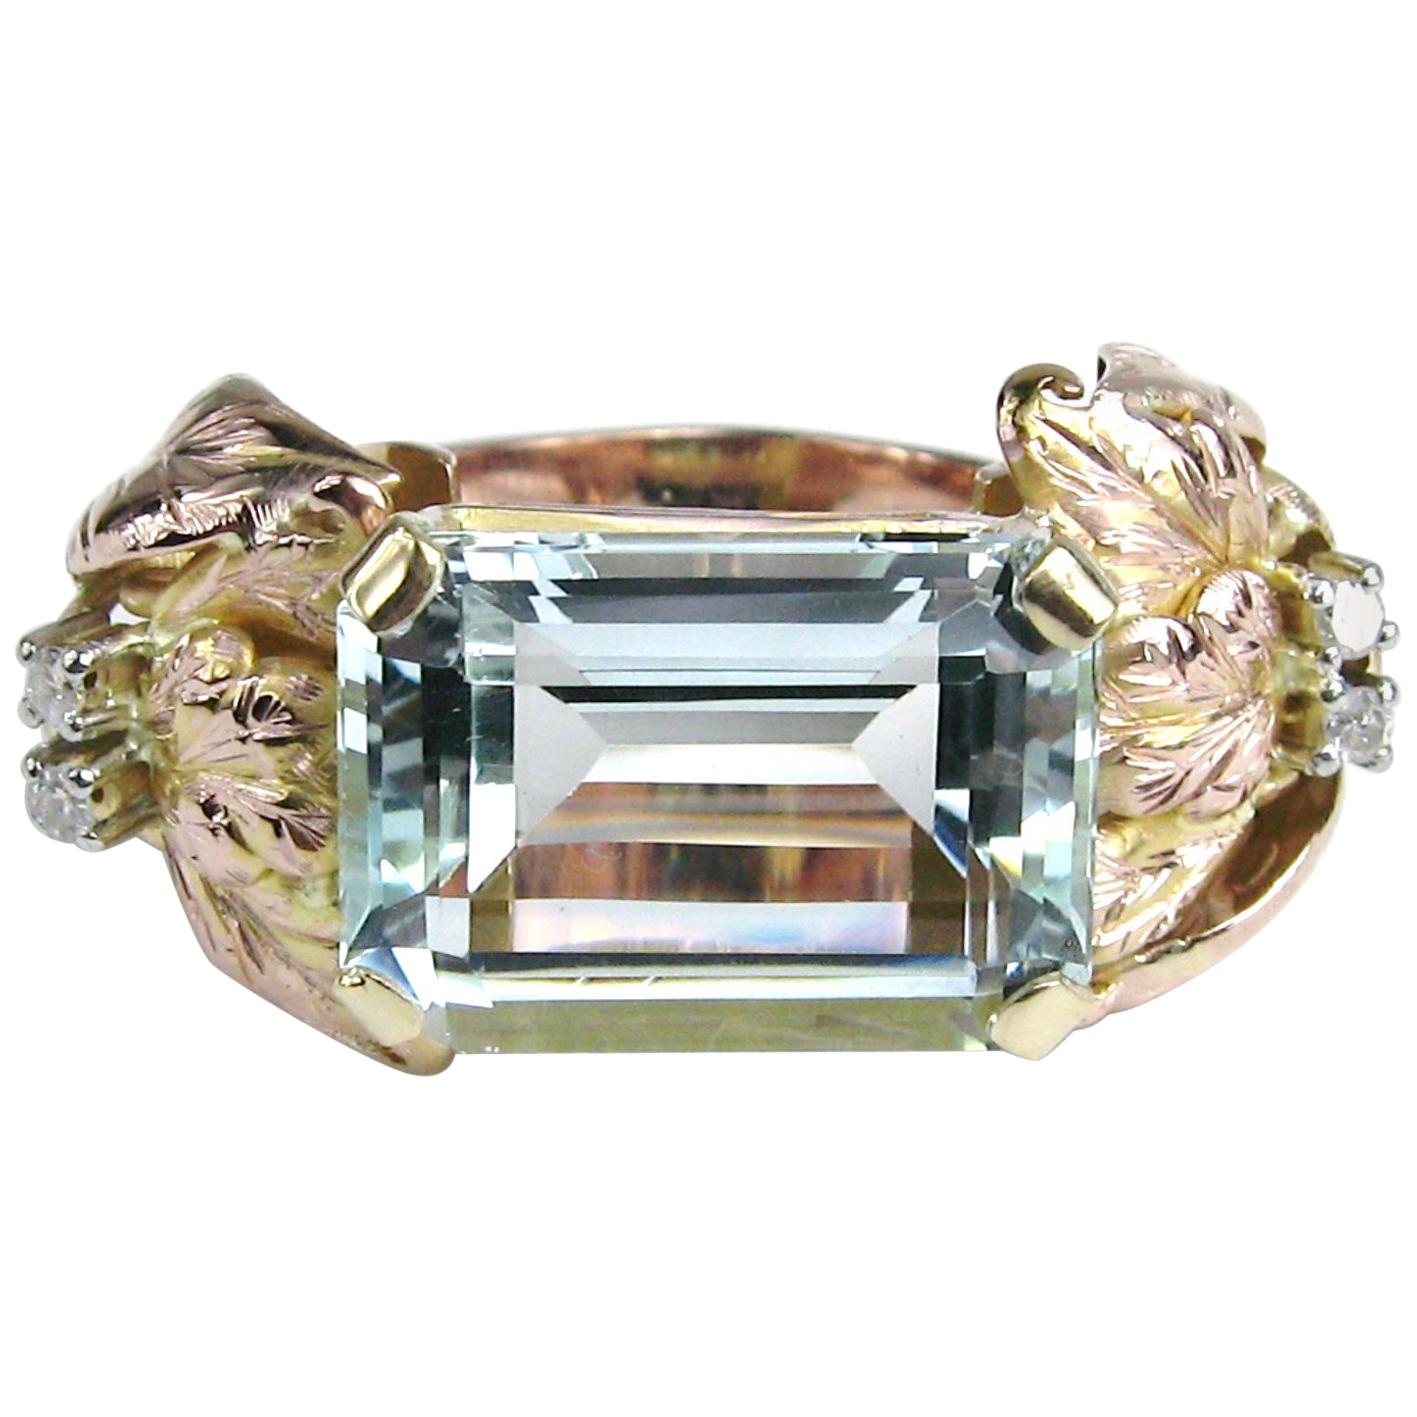 14 Karat Gold 13.75 Carat Emerald Cut Aquamarine Diamond Cocktail Ring